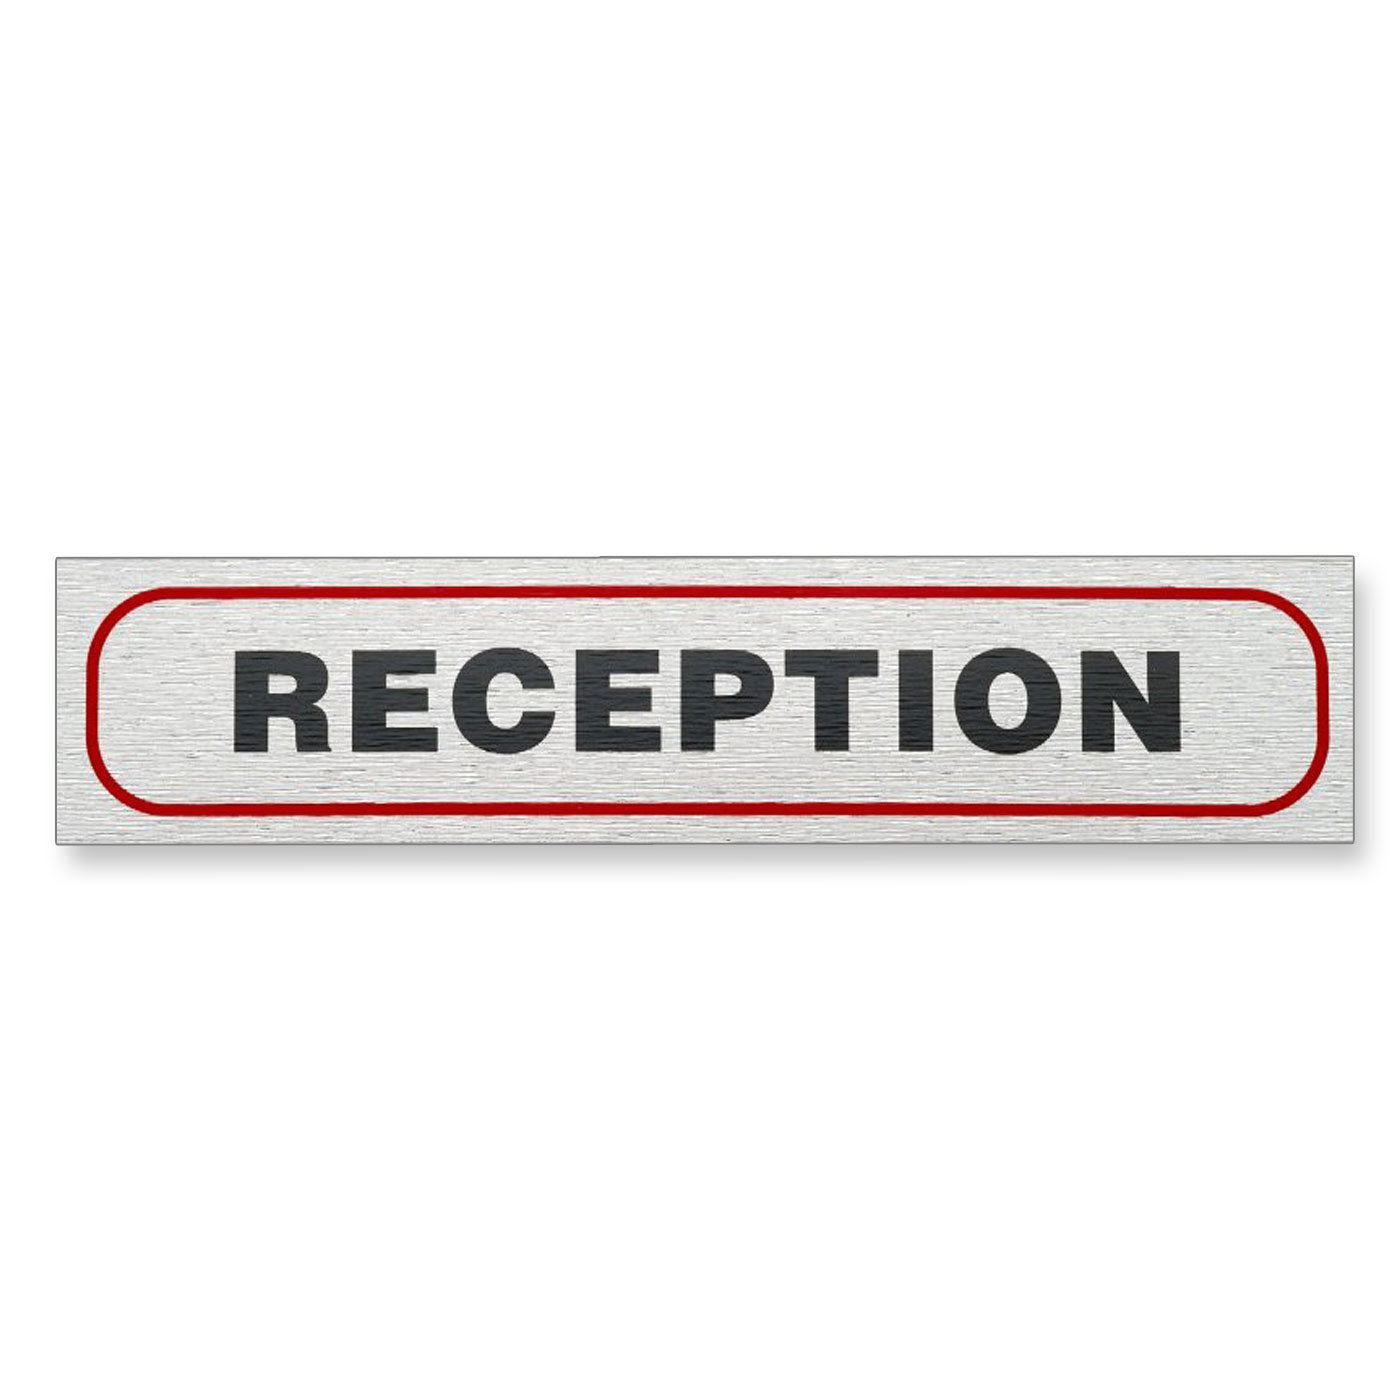 Information Sign "RECEPTION" 17 x 4 cm [Self-Adhesive]